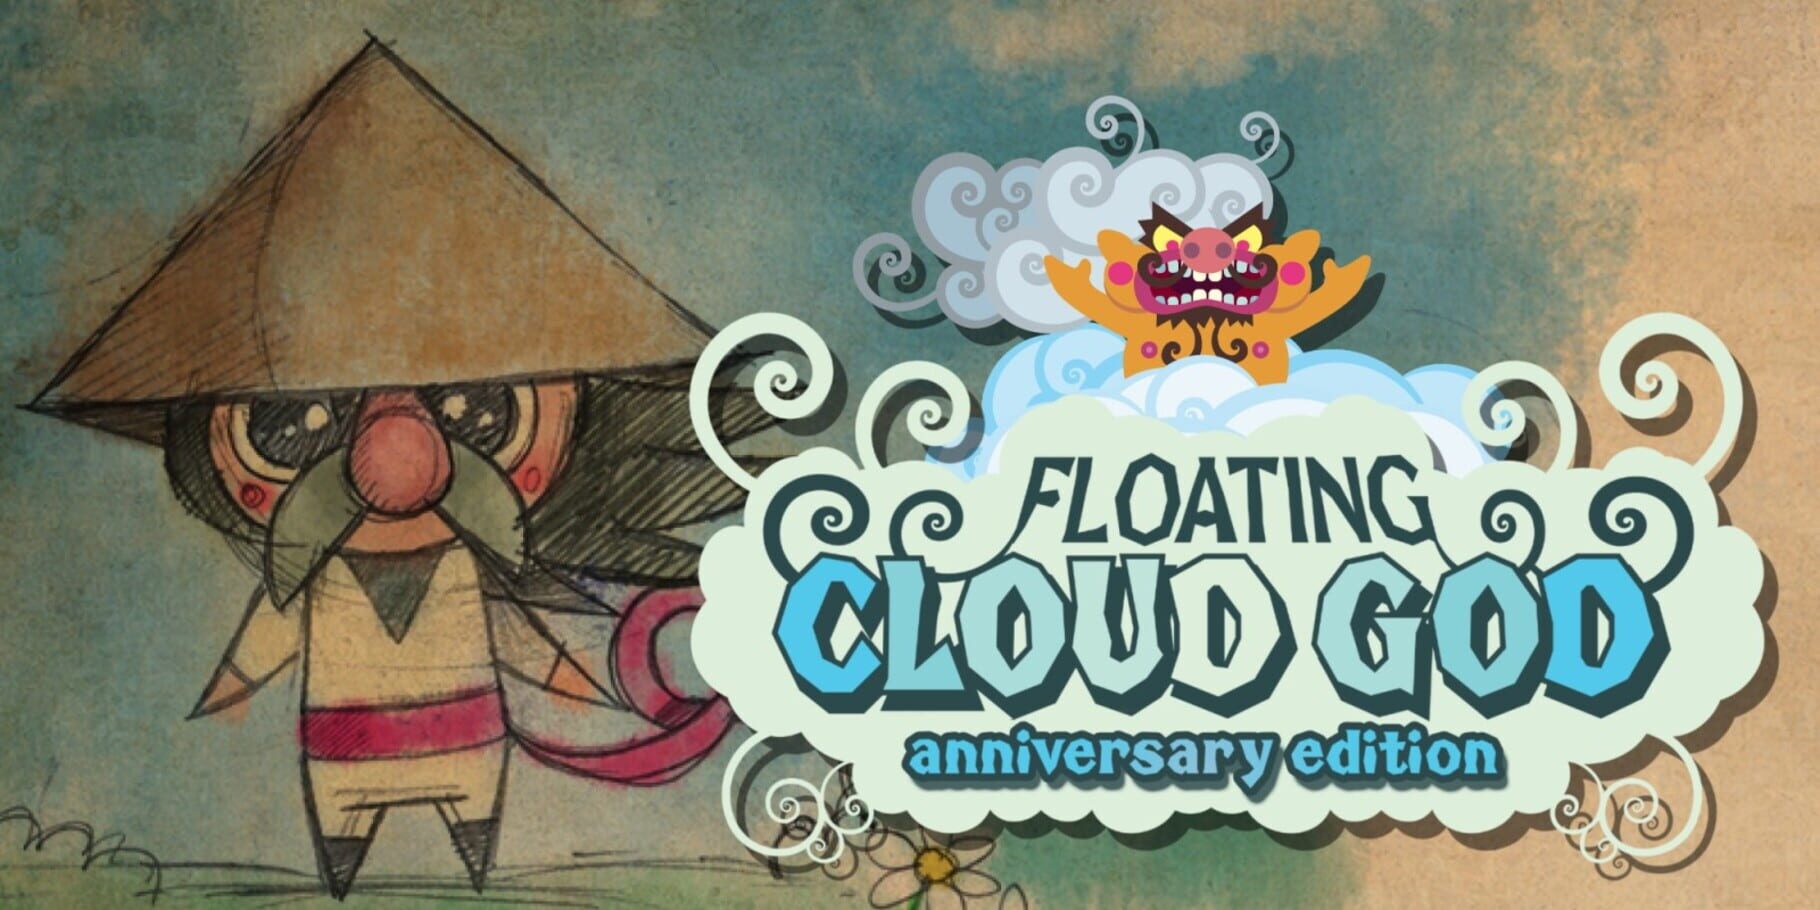 Floating Cloud God: Anniversary Edition artwork